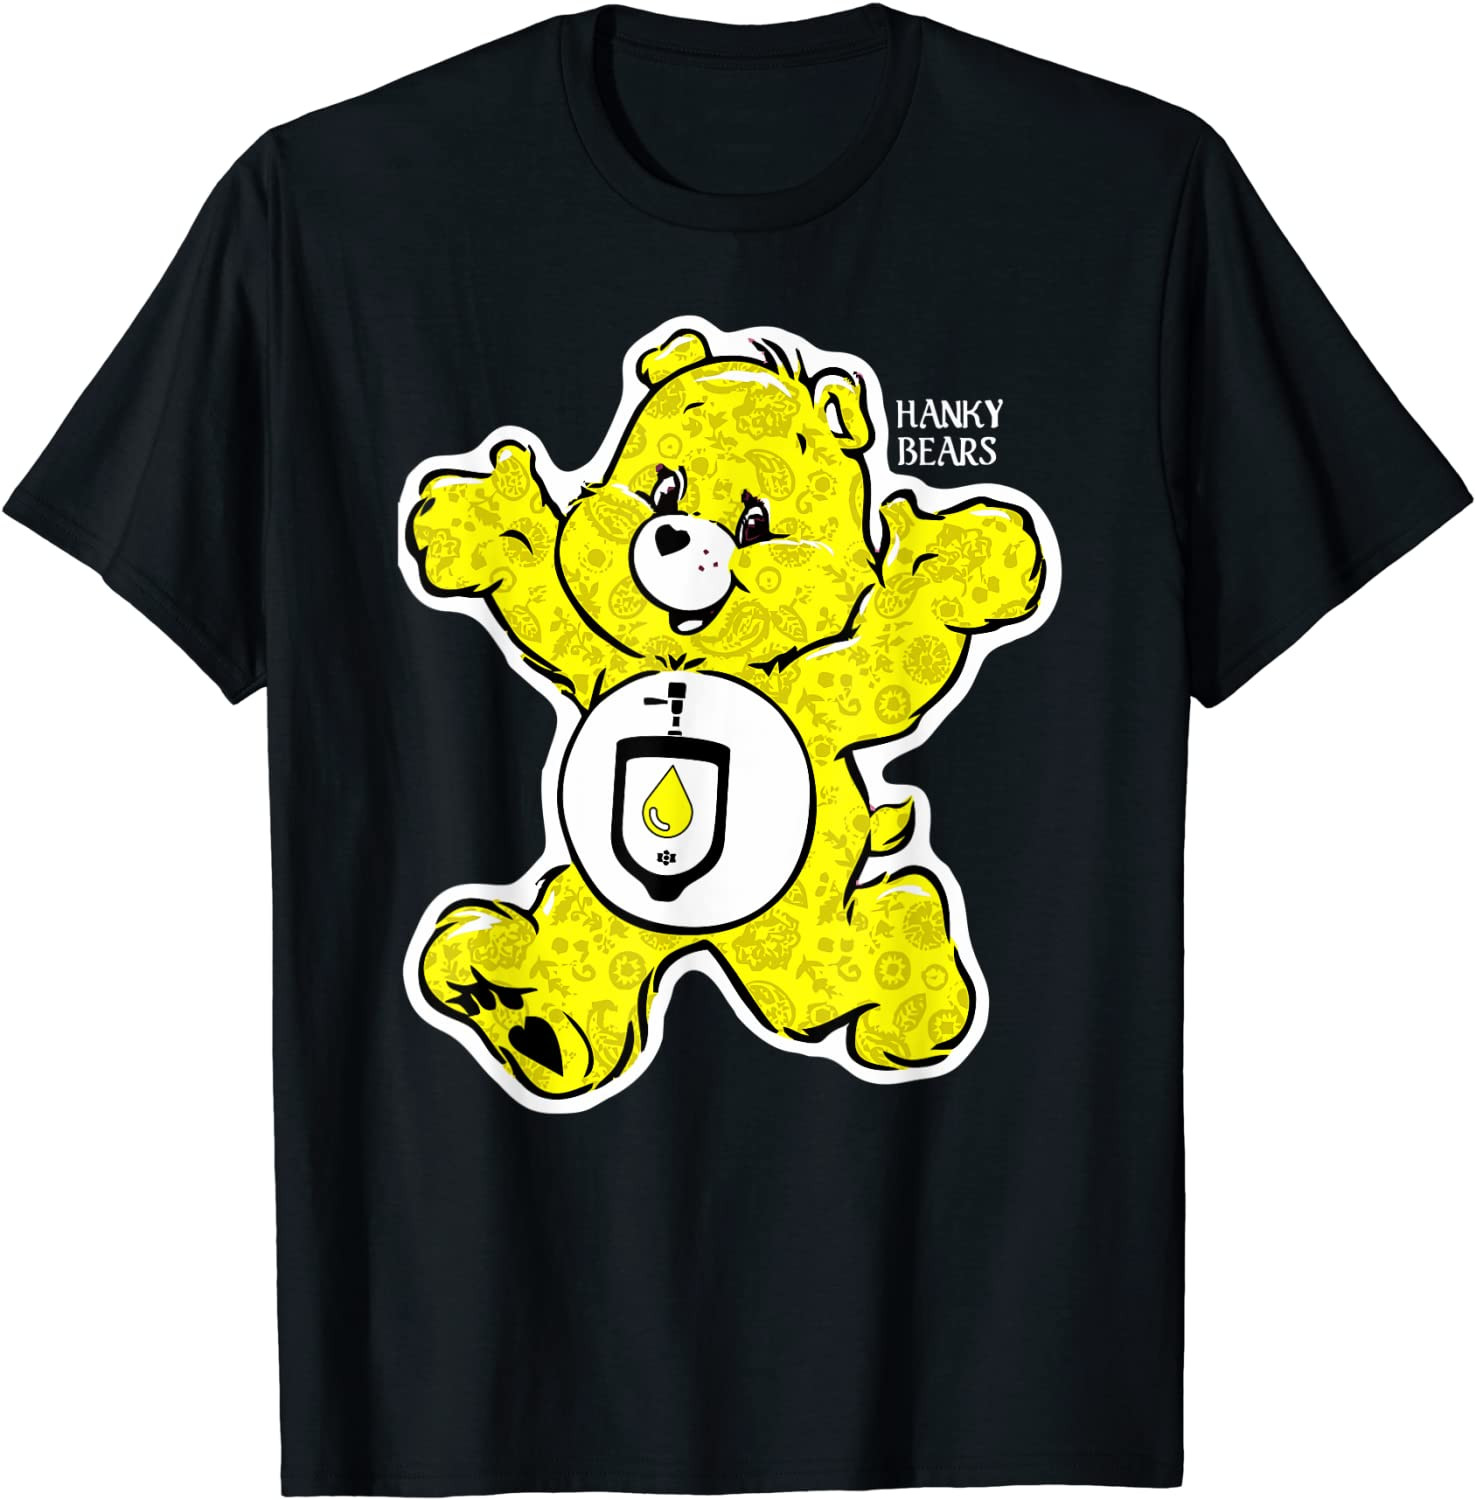 Hanky Bears - Yellow Watersports Popular Halloween Costume T-Shirt